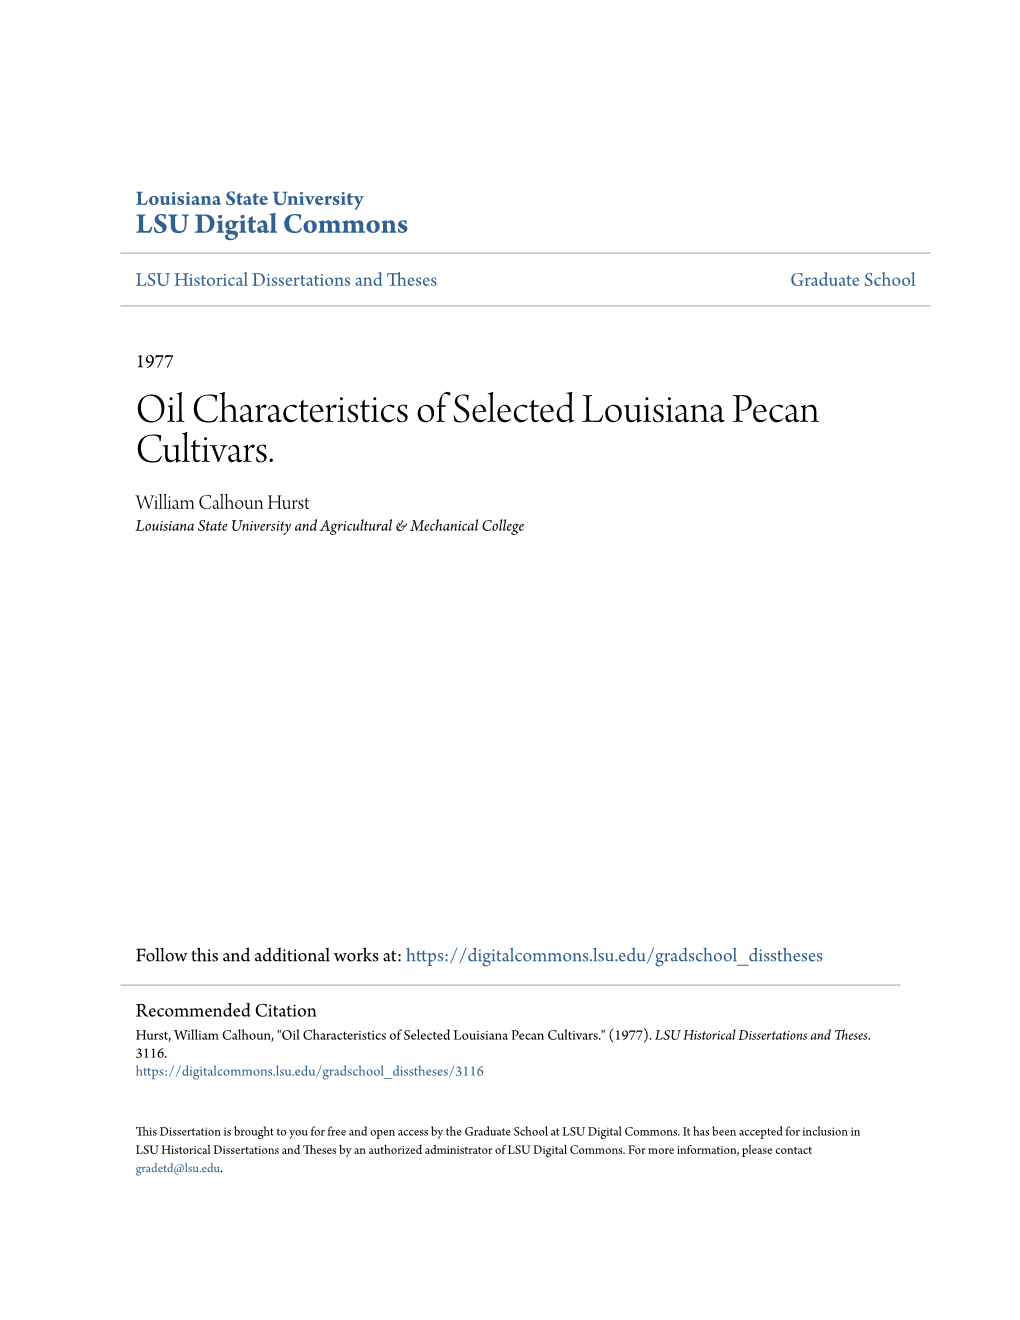 Oil Characteristics of Selected Louisiana Pecan Cultivars. William Calhoun Hurst Louisiana State University and Agricultural & Mechanical College